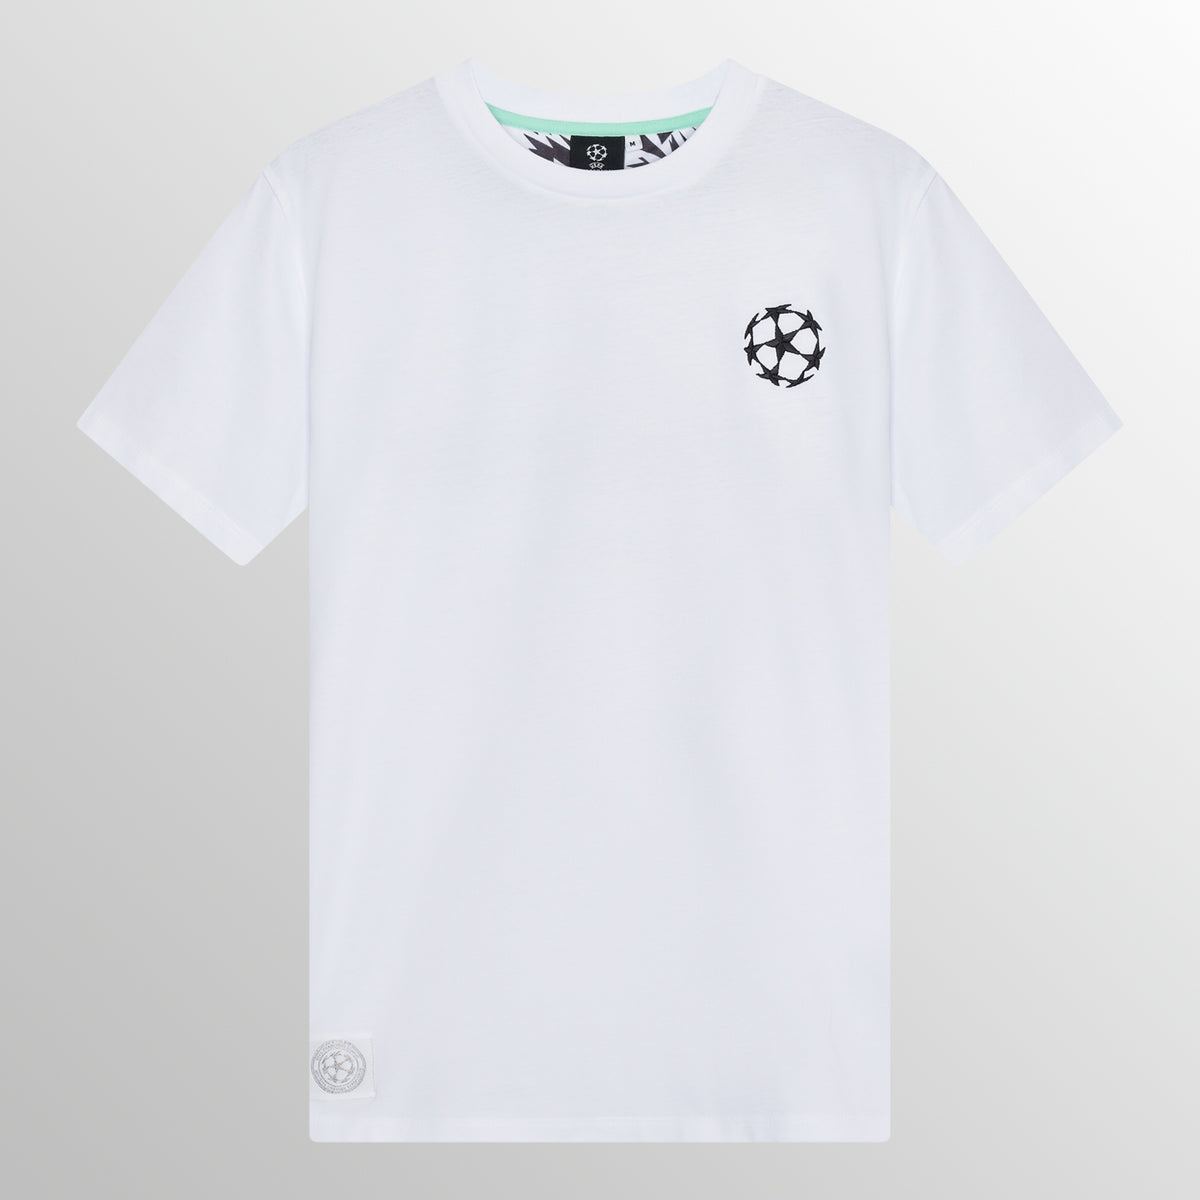 UEFA Champions League T-Shirt UEFA Club Competitions Online Store